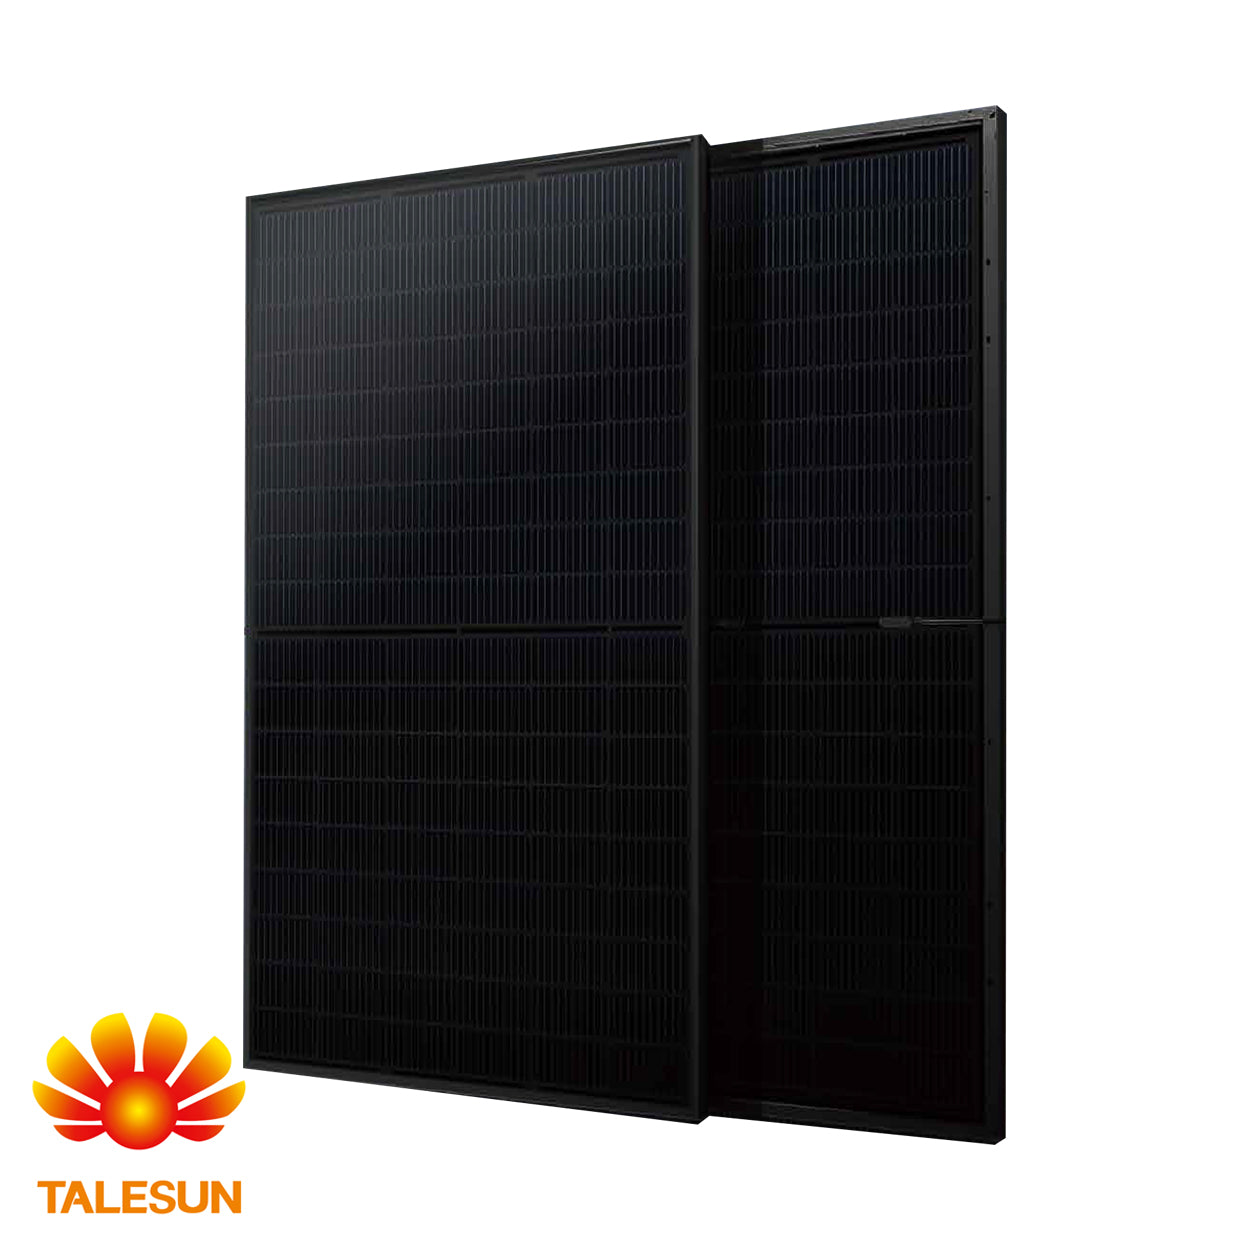 Talesun 400W Bifacial Solar Panel (25 Year Warranty)